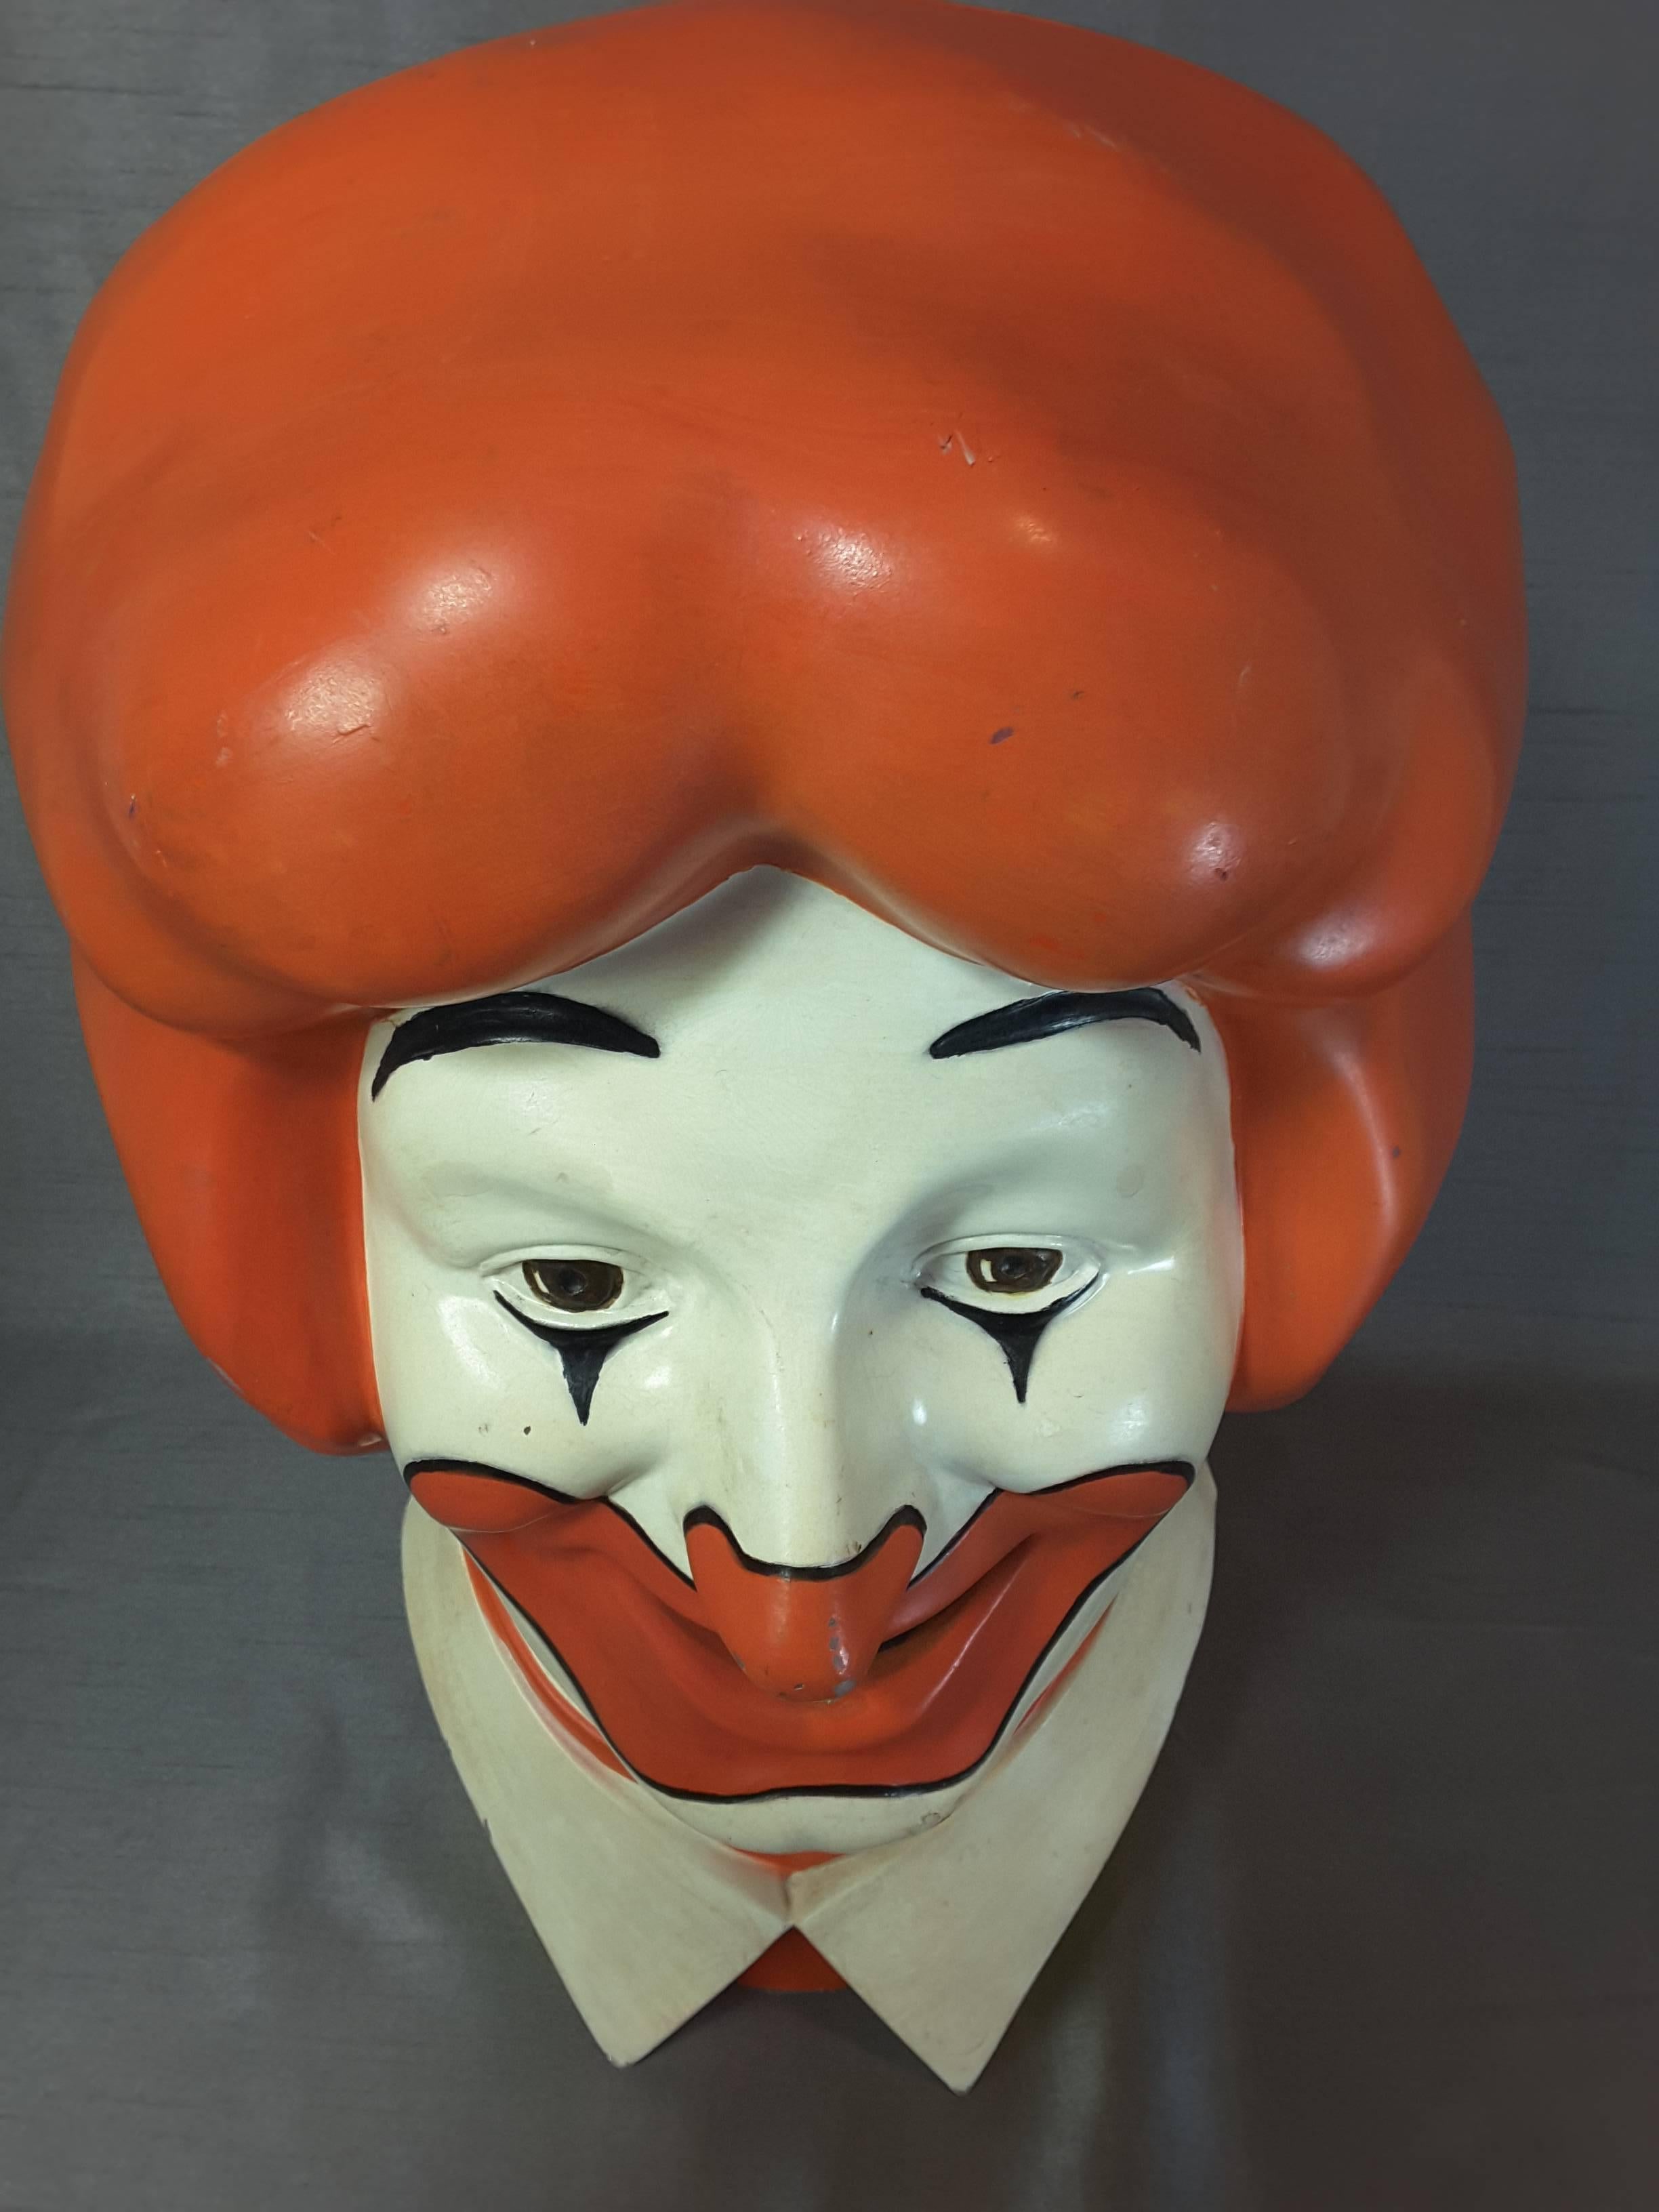 World's most famous clown 